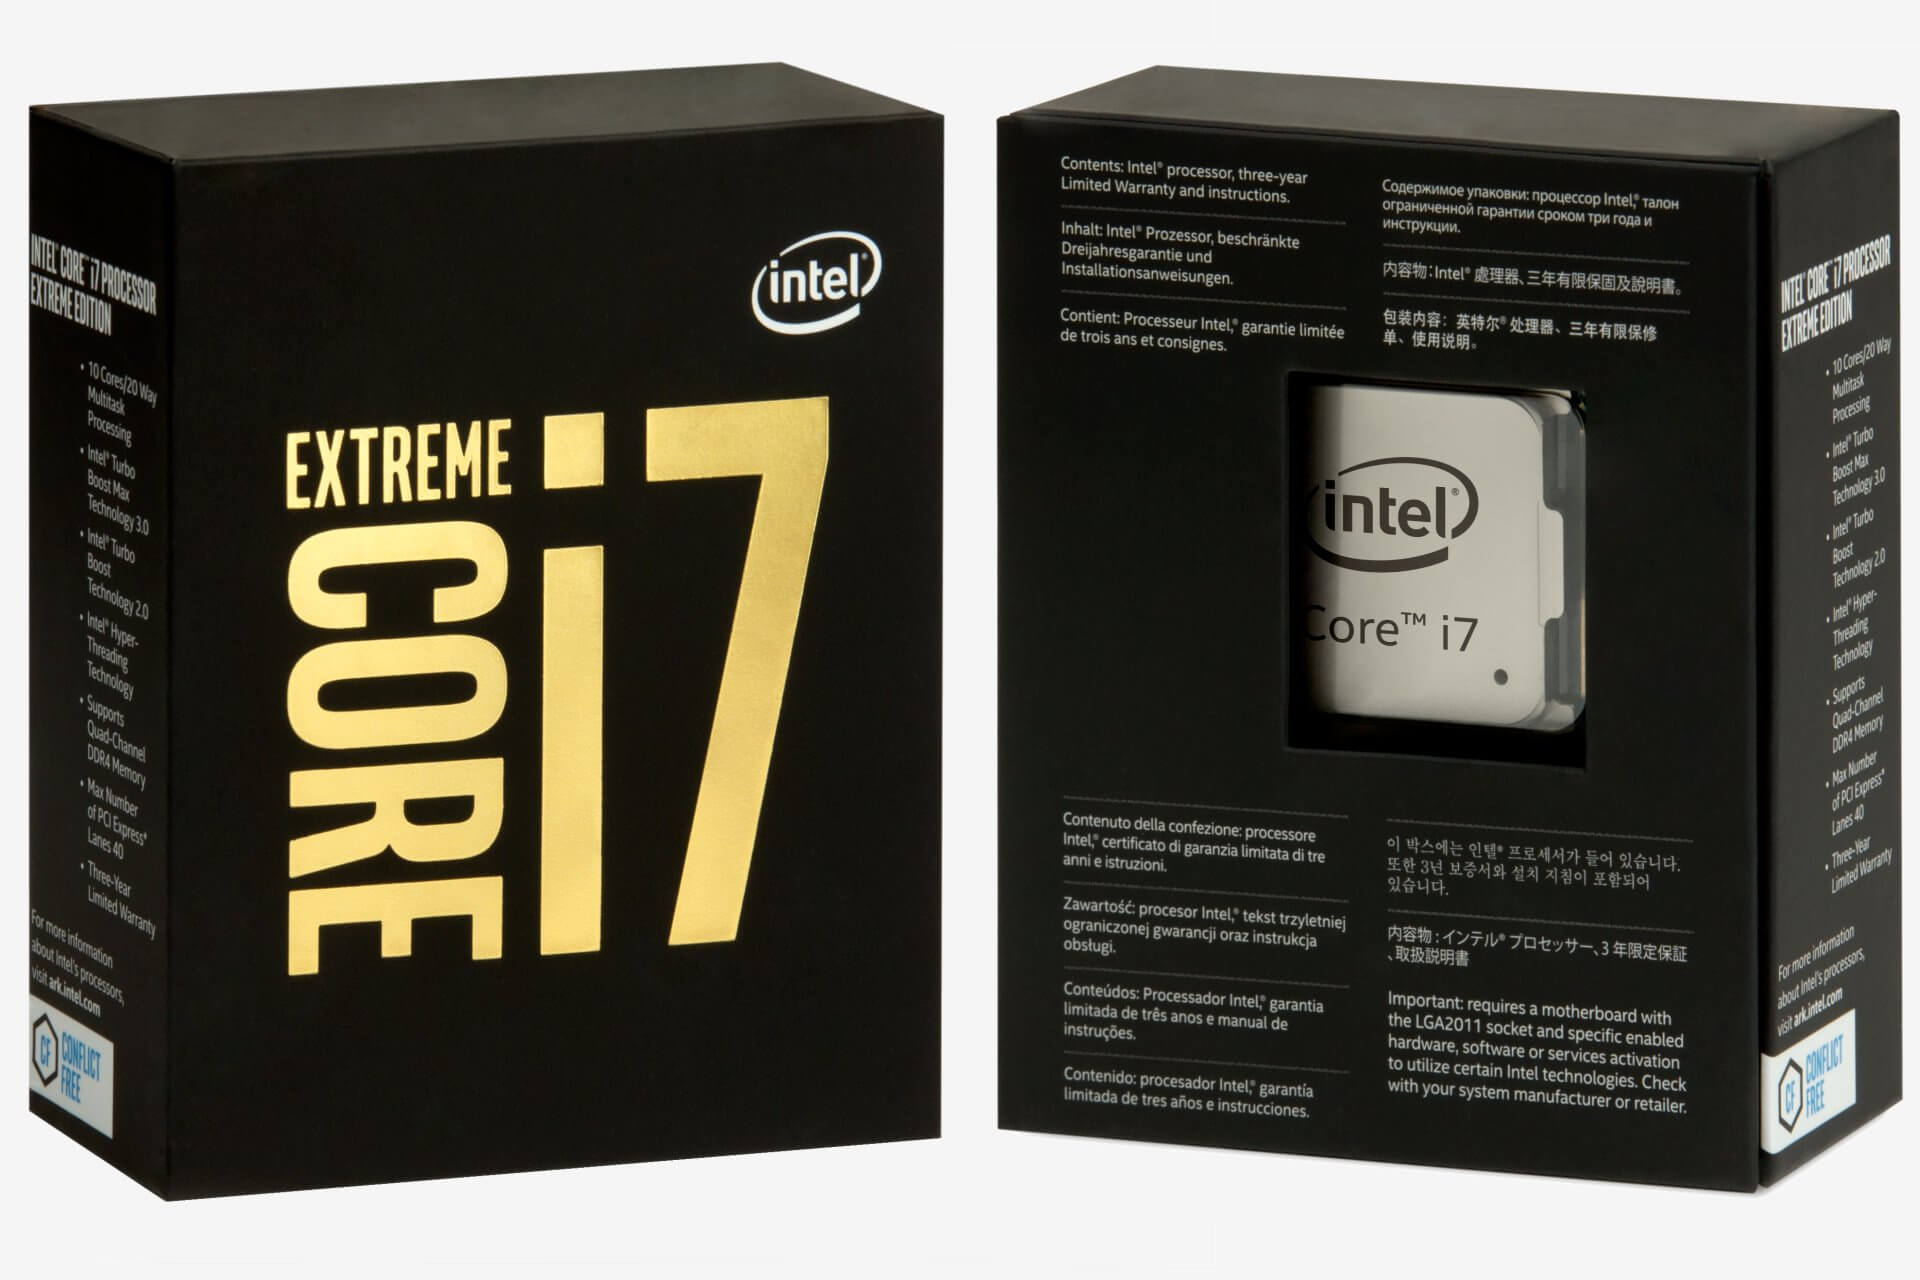 Intel Core i7-6950X Broadwell-E Review - The First 10-core Desktop CPU